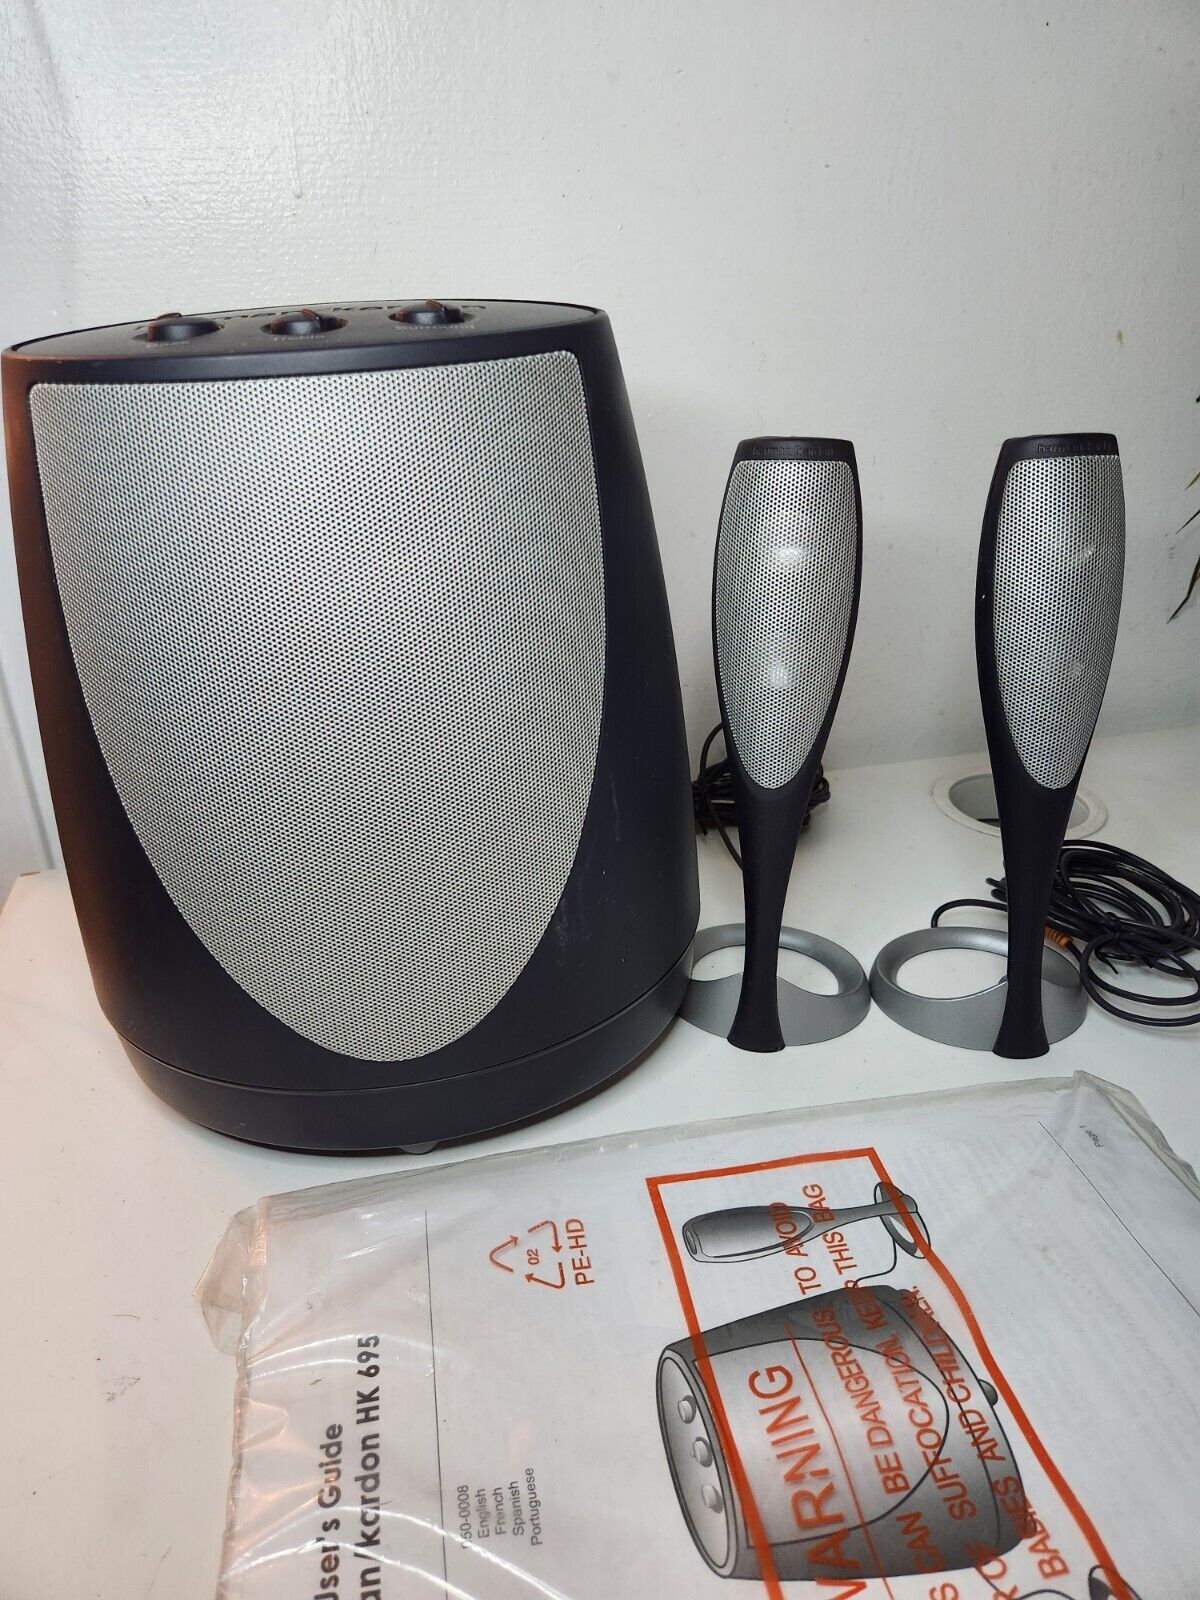 Harmon Kardon Computer Subwoofer & Speakers Model HK695-01 